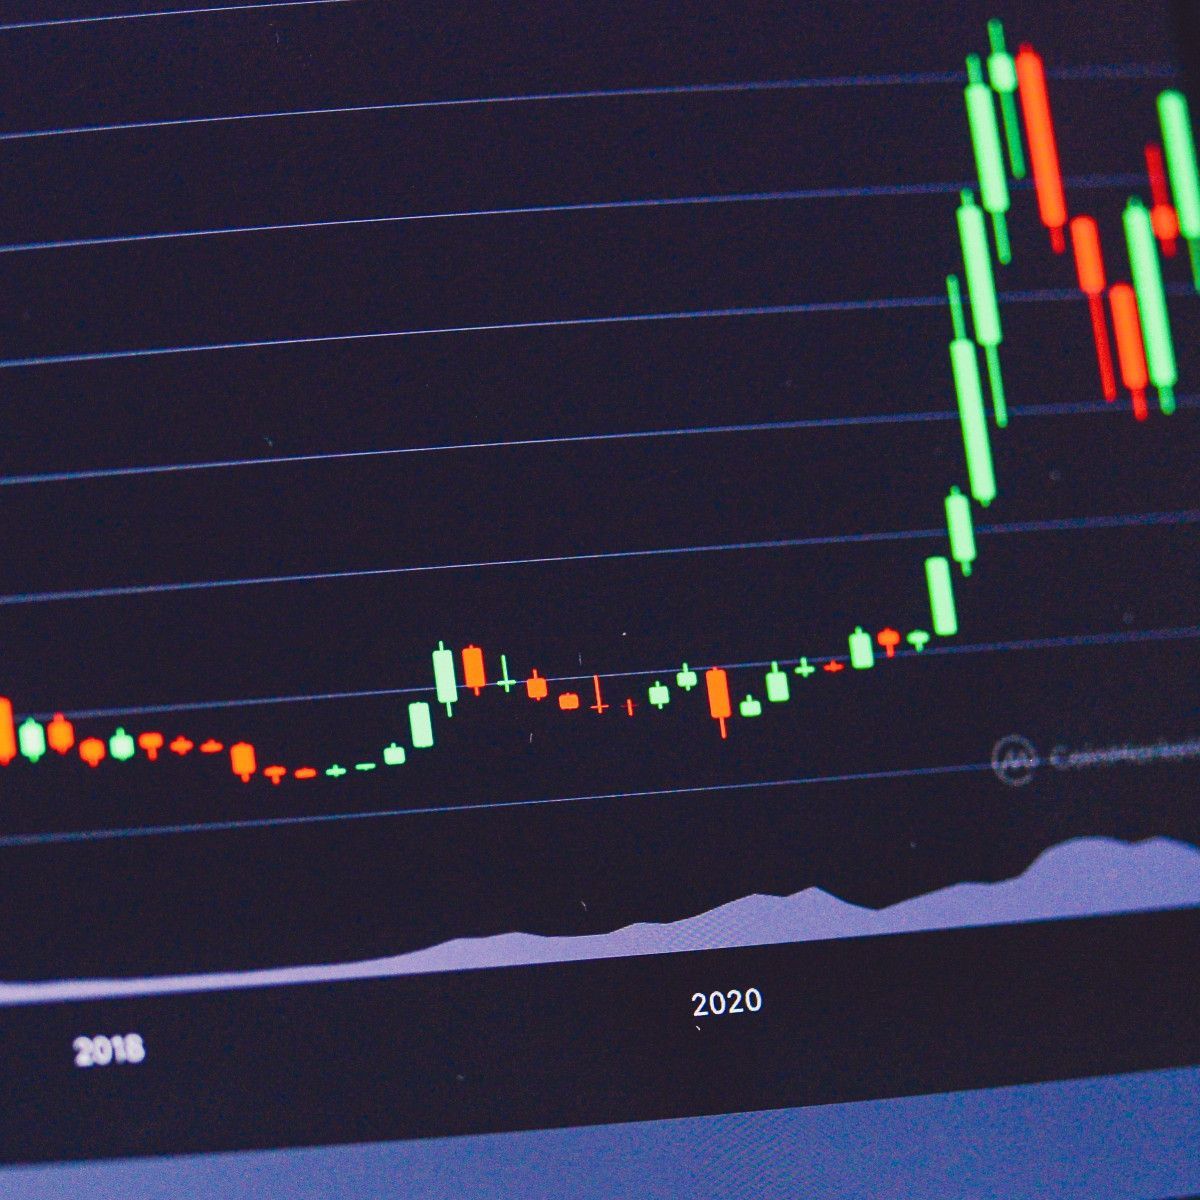 a computer screen shows a graph of a stock market